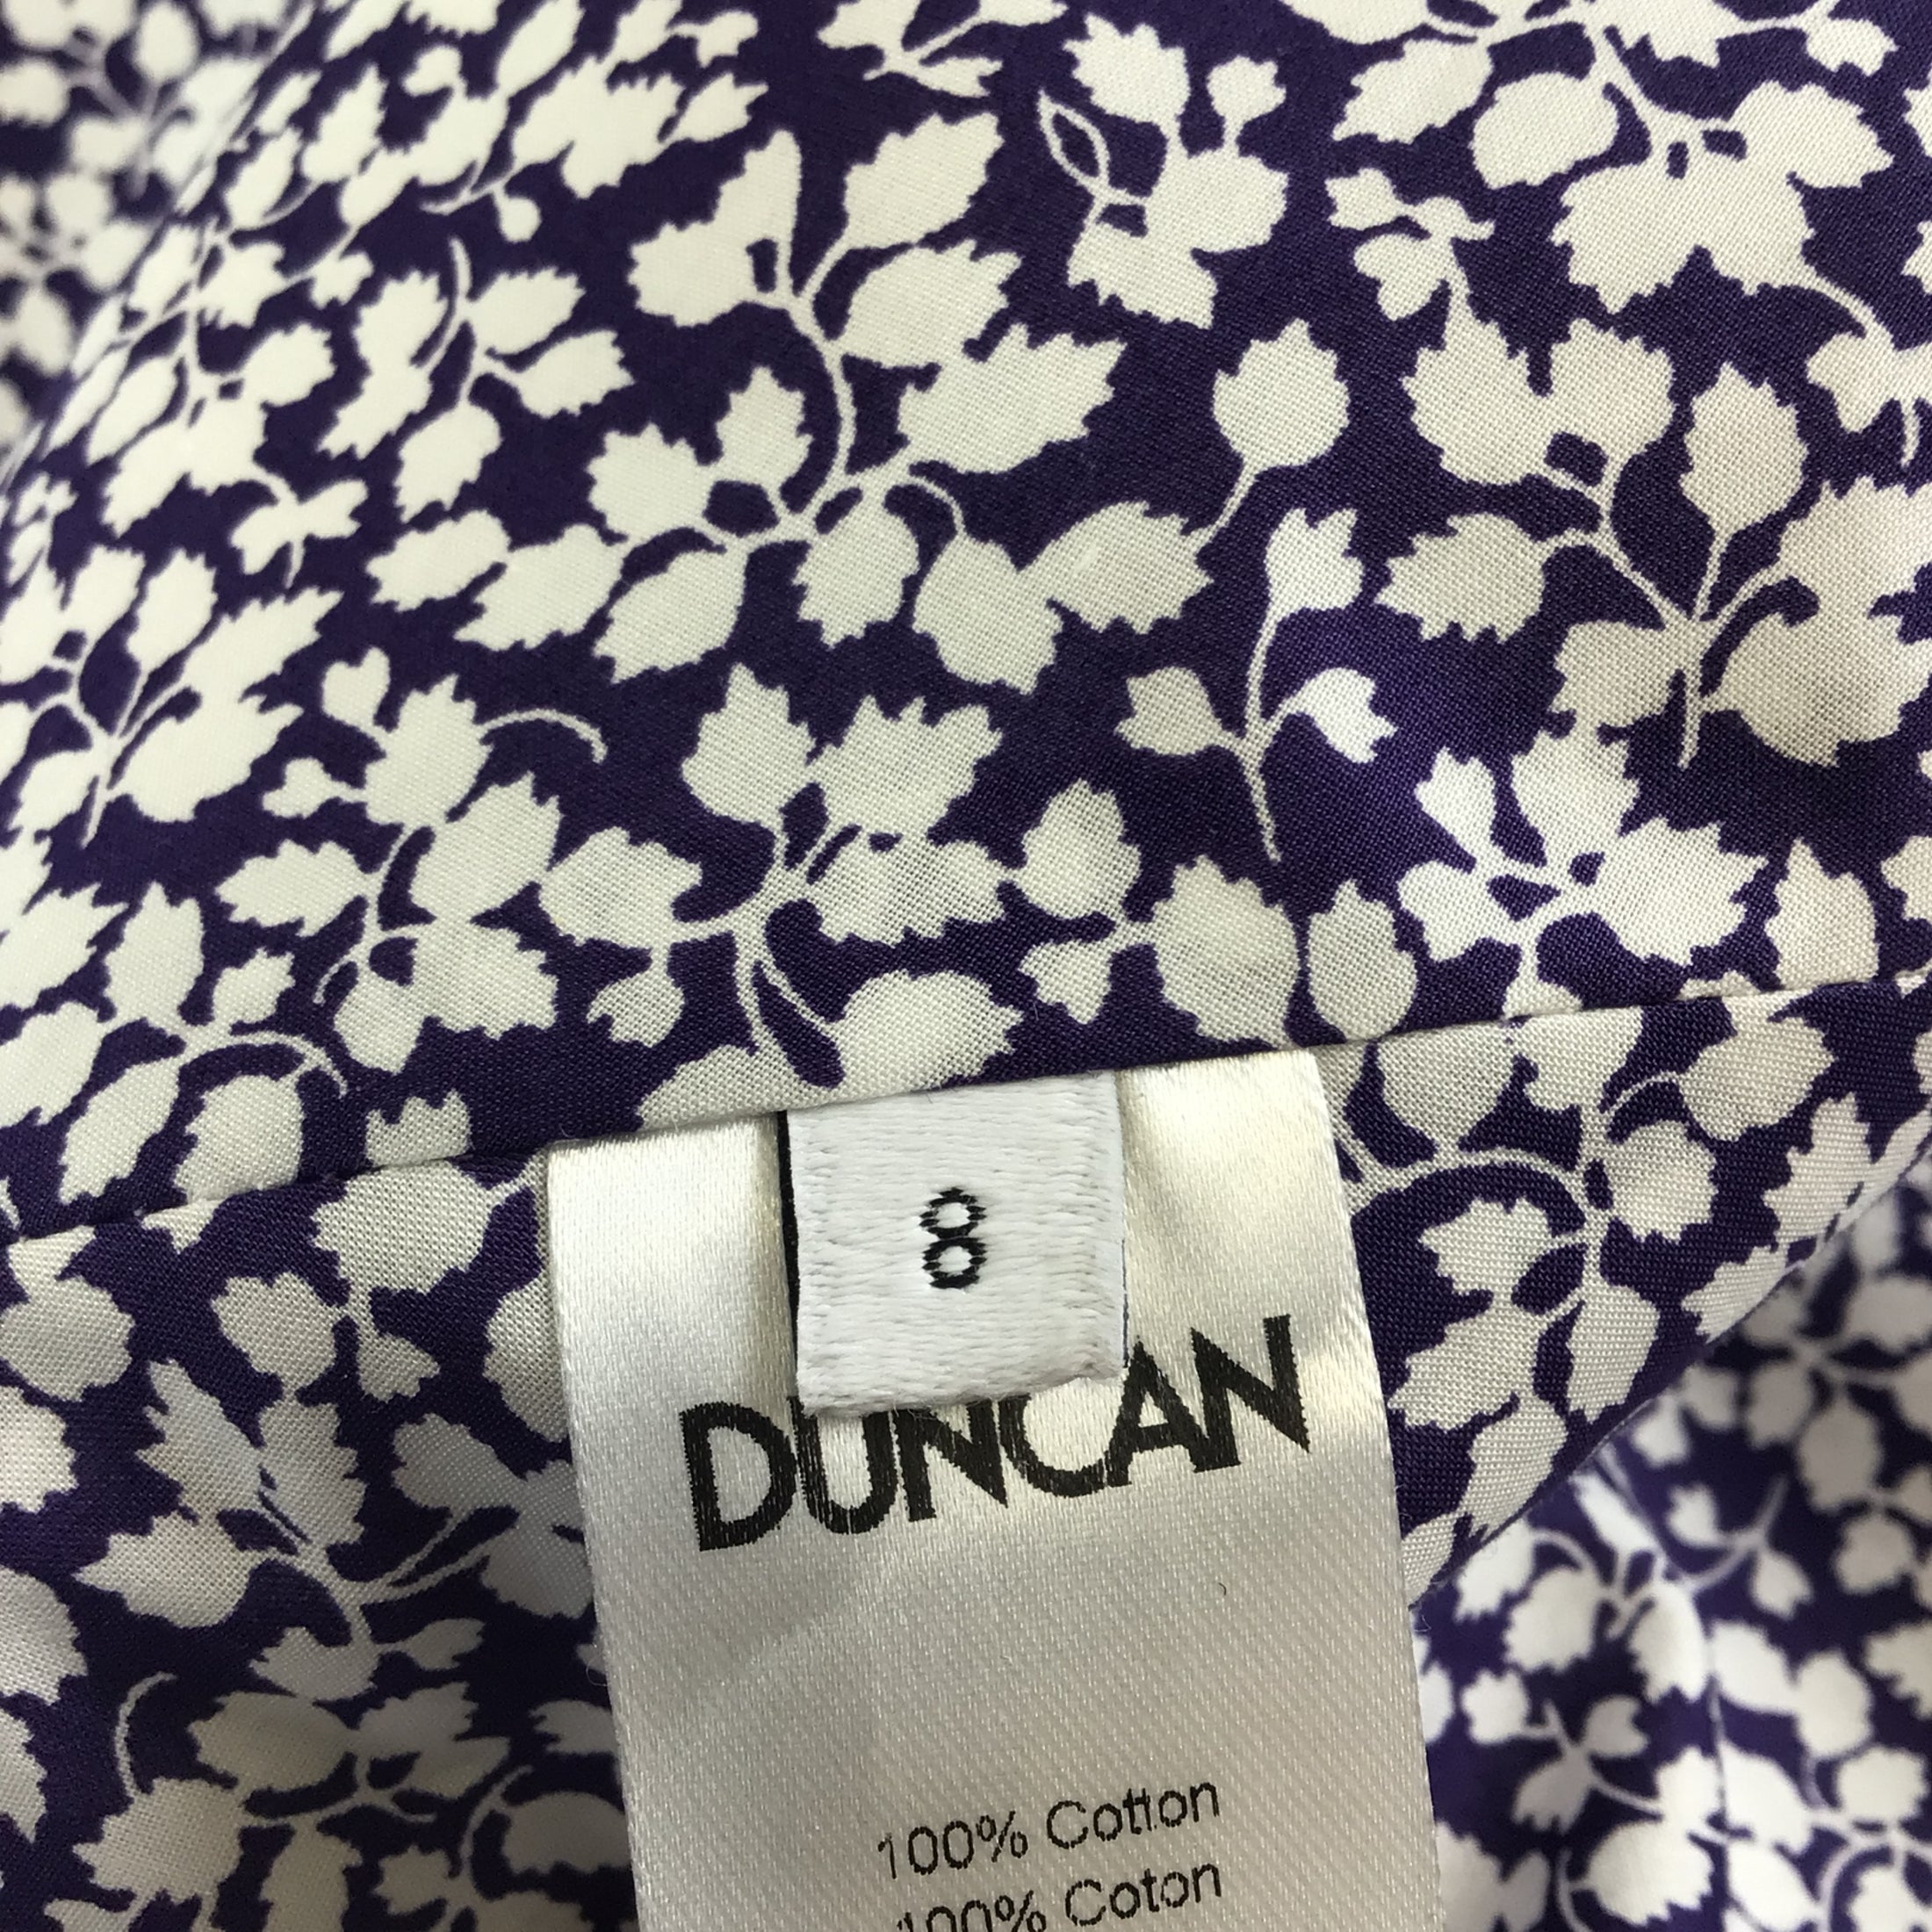 Duncan Purple / White Printed Sleeveless Cotton A-Line Dress